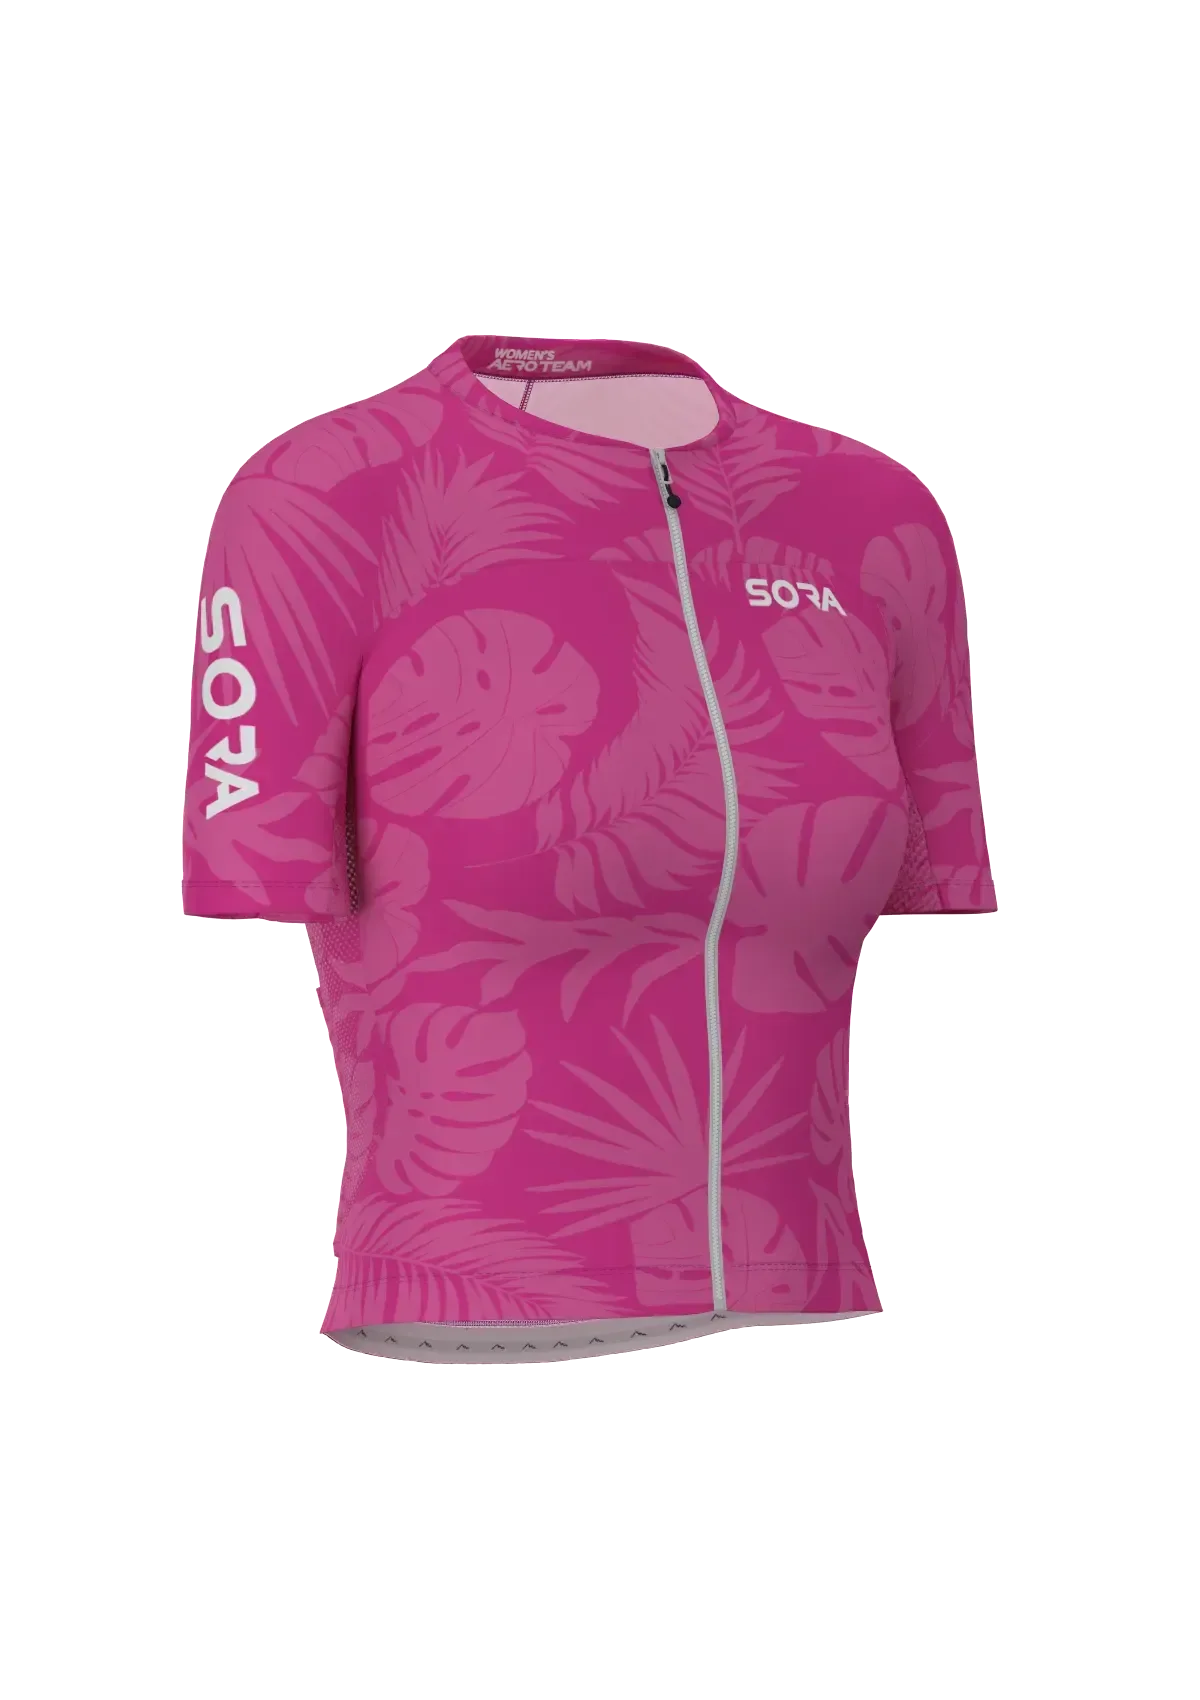 Aero Team women's cycling jersey pink